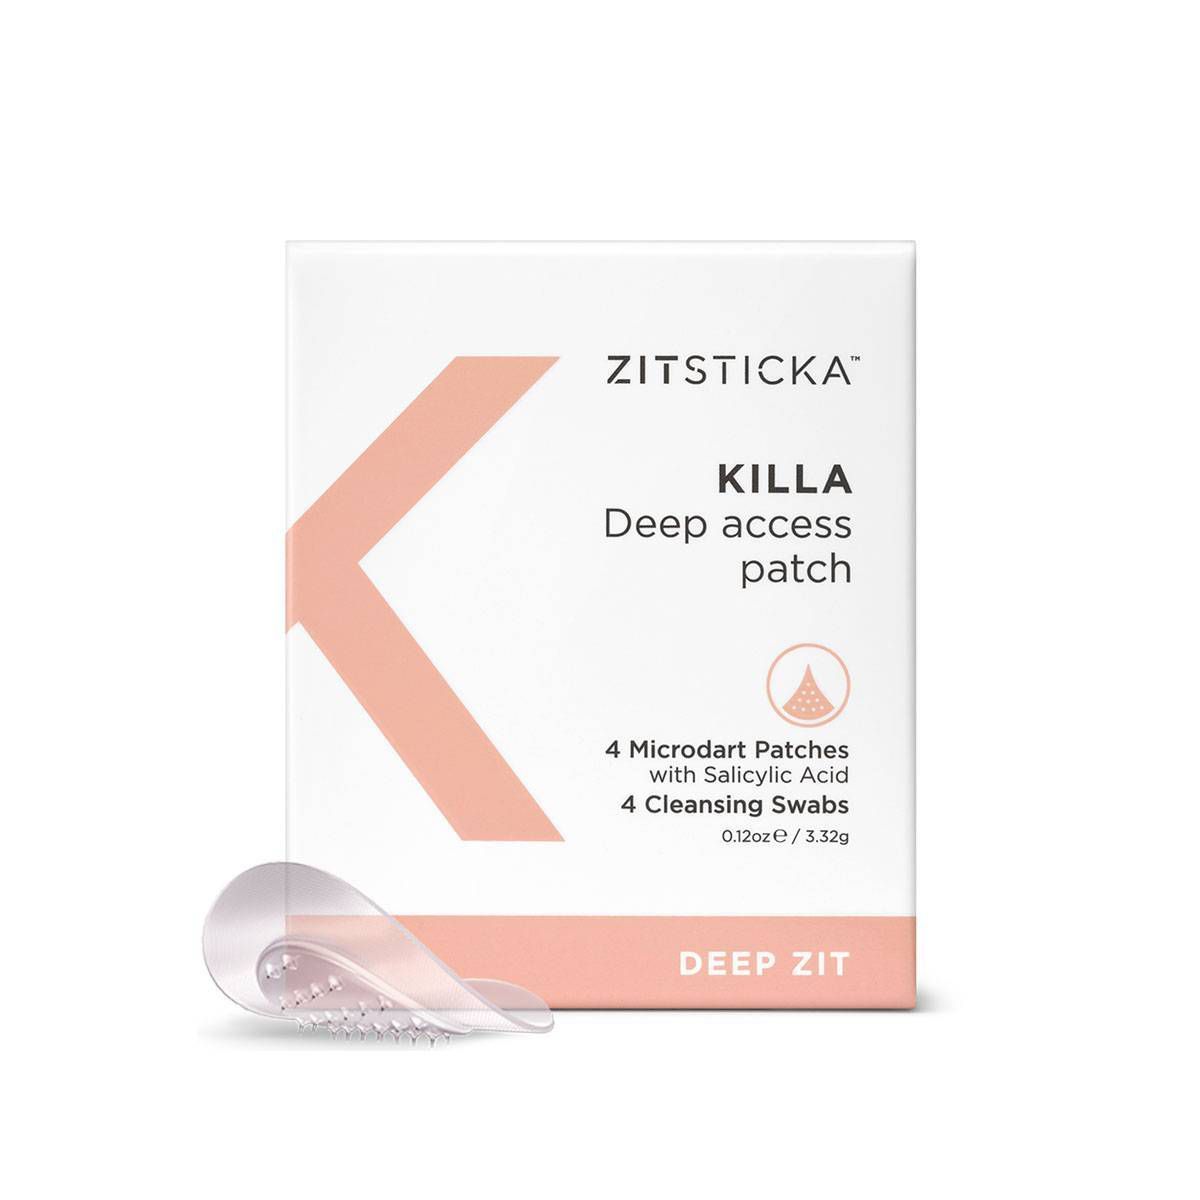 ZitSticka Killa Deep Zit Microdart Pimple Patch - 4pk | Target